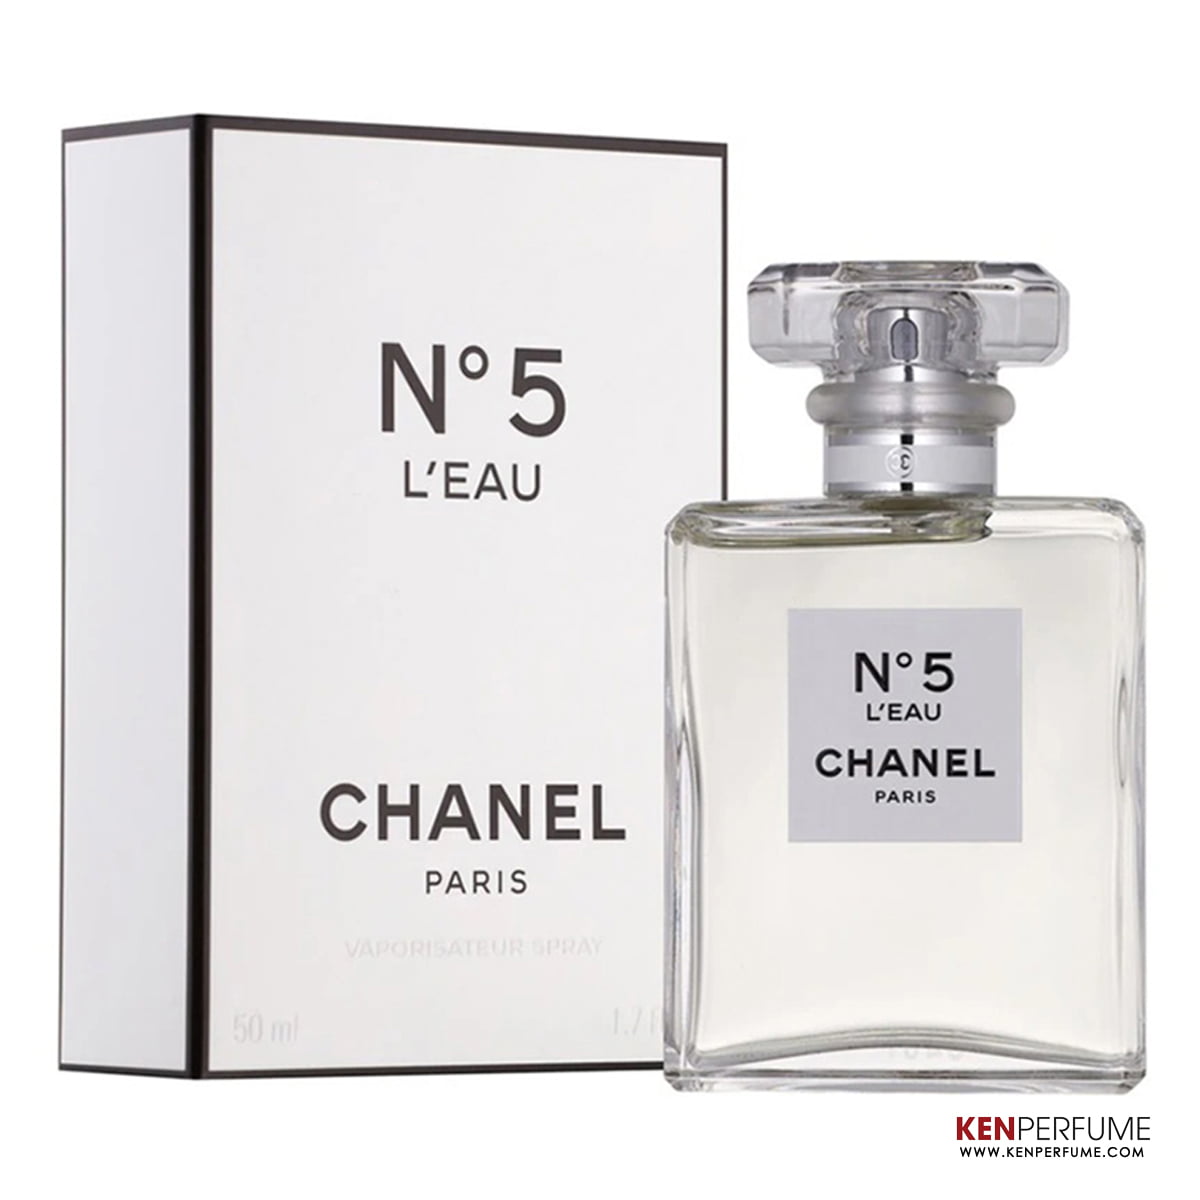 Chiết Chanel No5 Leau EDT 10ml  Tiến Perfume